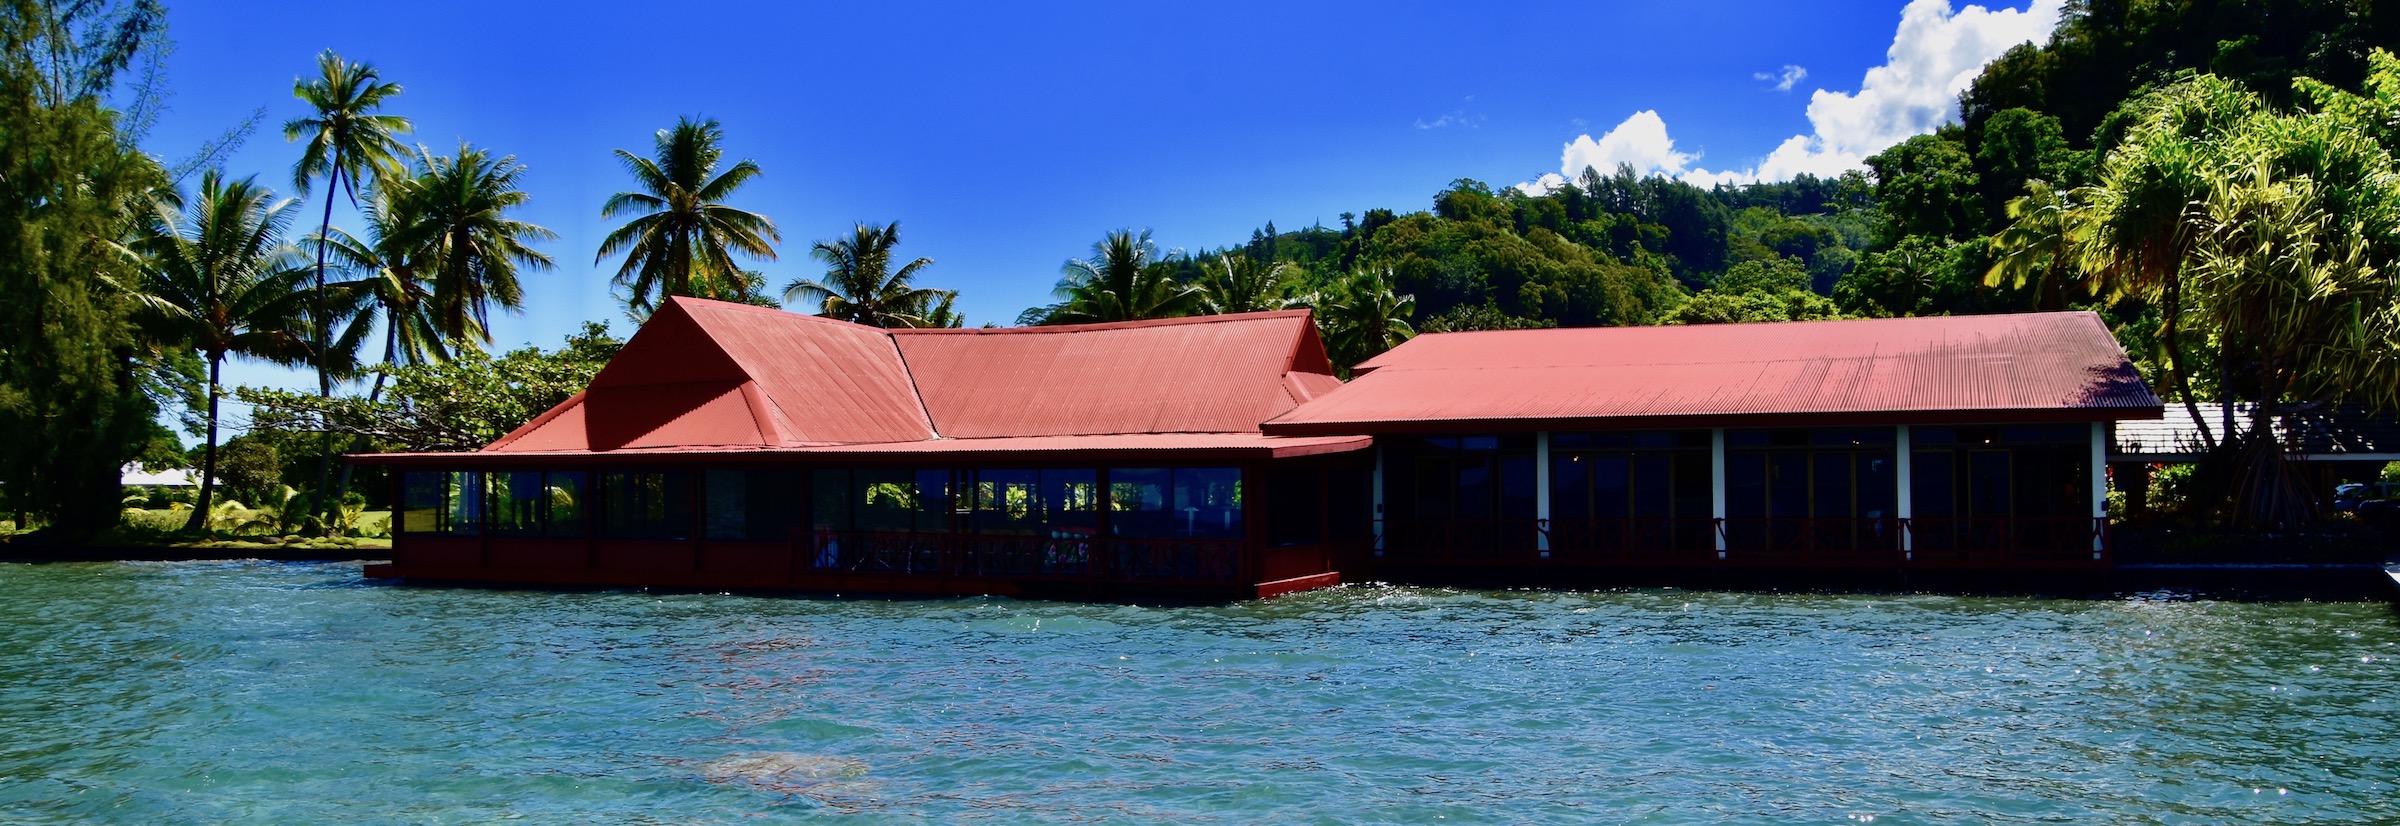 The Paul Gauguin Museum Restaurant, Tahiti Circle Tour